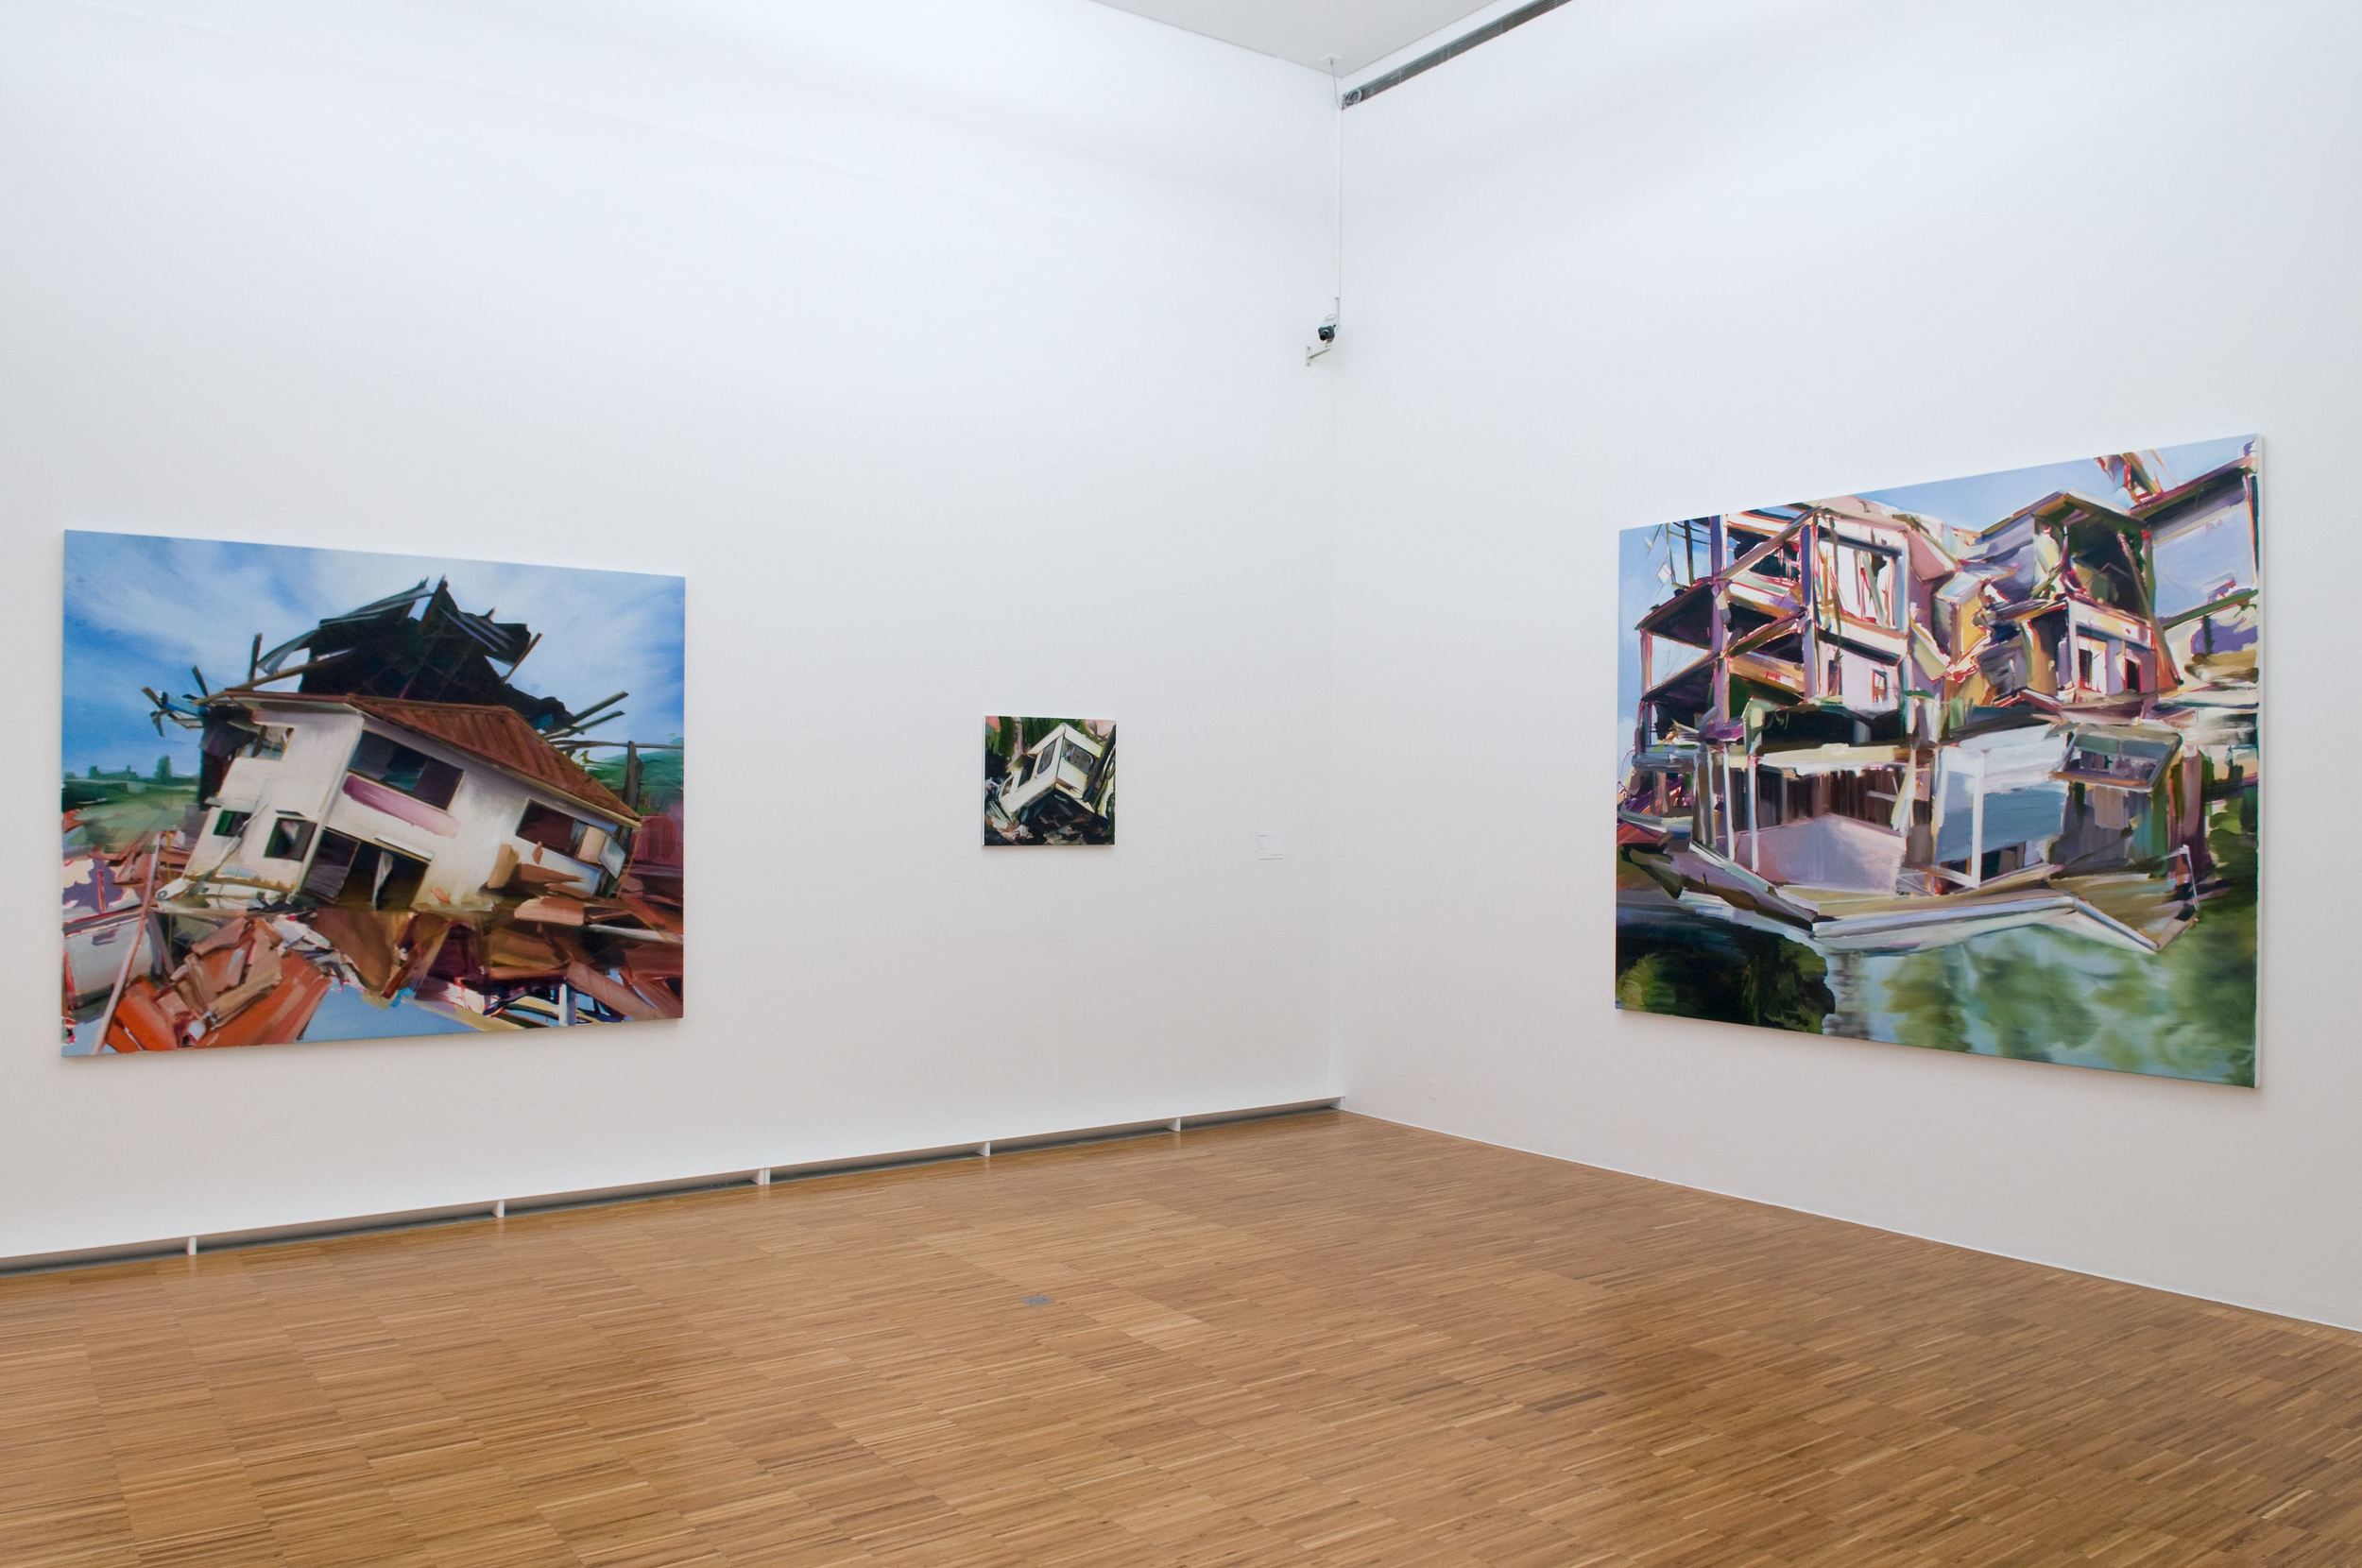   Duncan Wylie - Open House  , Musée de Grenoble, 2009.&nbsp;Curator Guy Tosatto.  